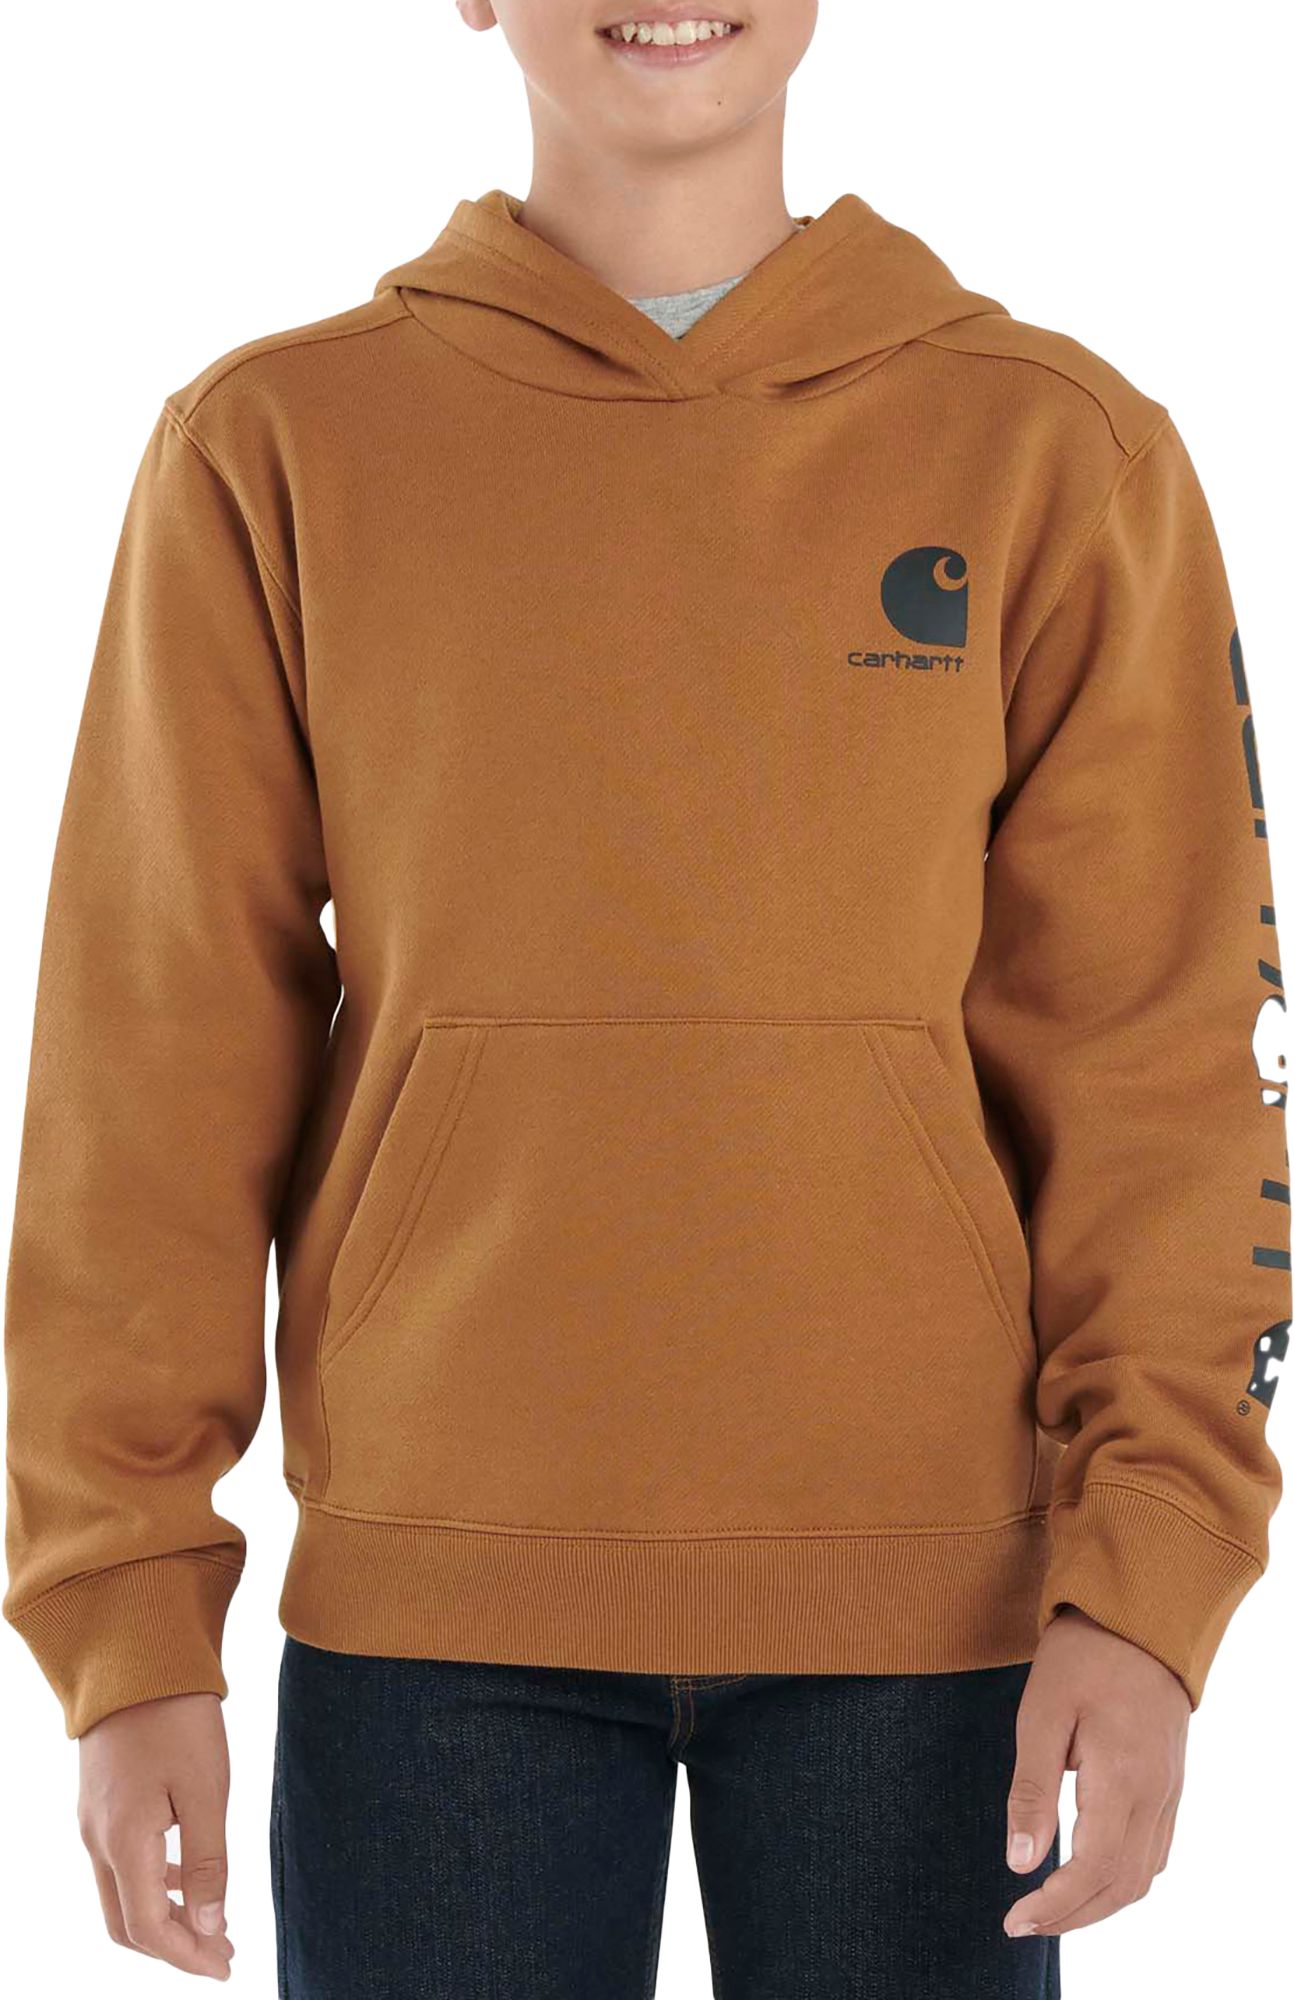 Carhartt Boys Long Sleeve Graphic Sweatshirt